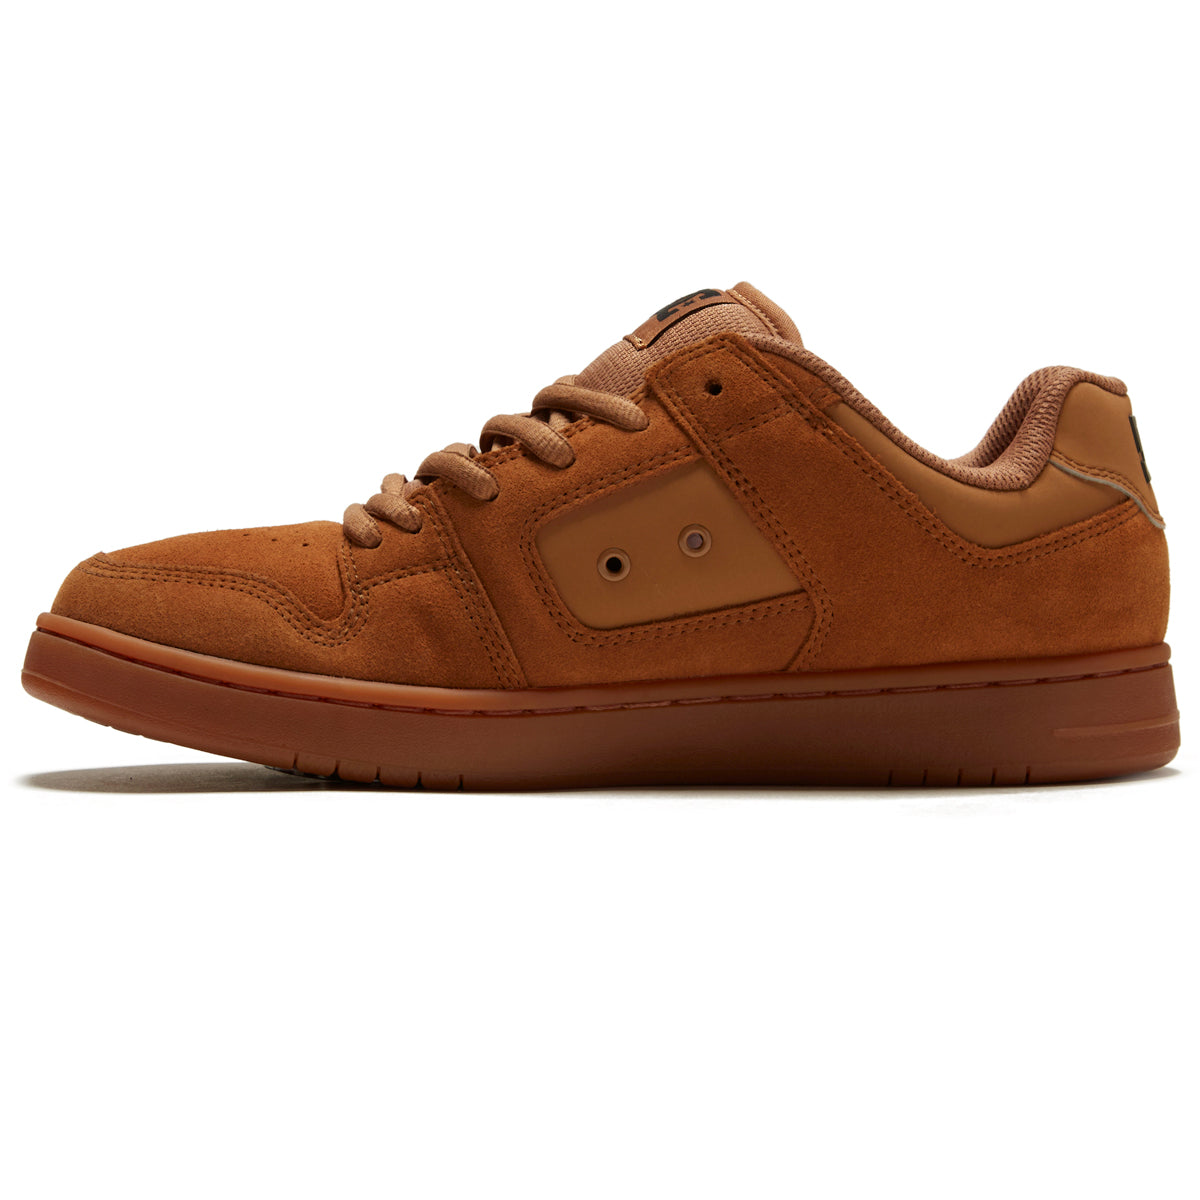 DC Manteca 4 S Shoes - Brown/Tan image 2